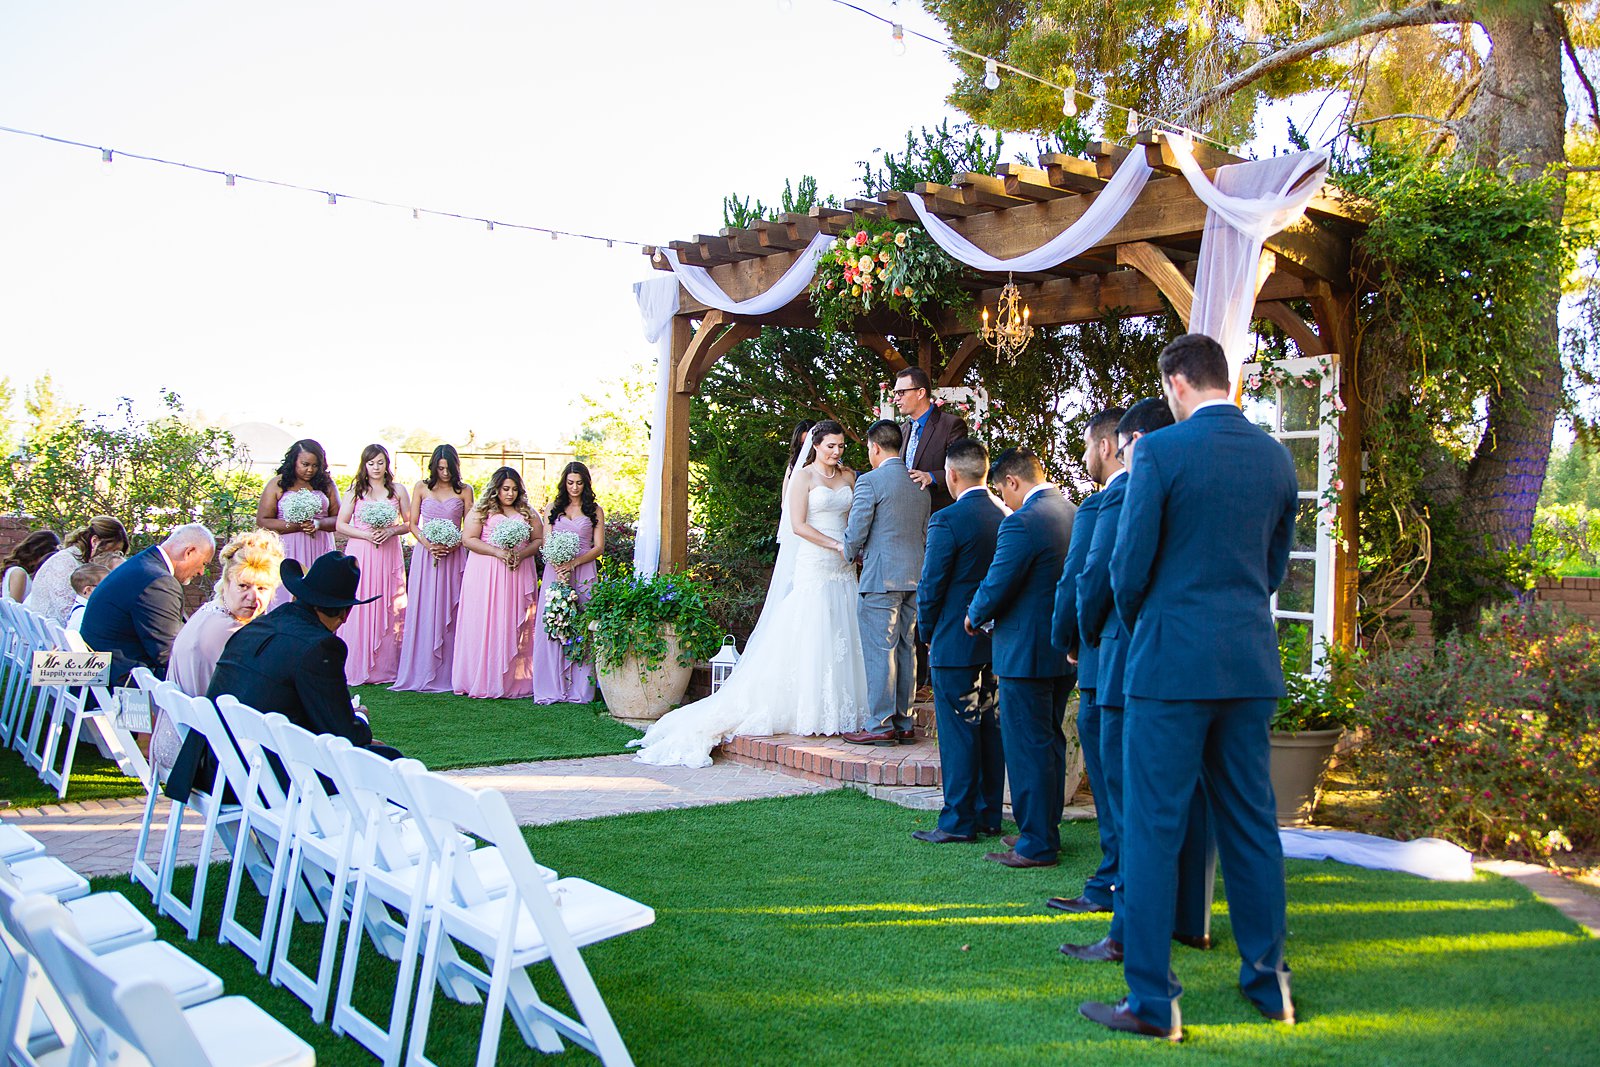 Wedding ceremony at Schnepf Farms by Arizona wedding photographer PMA Photography.